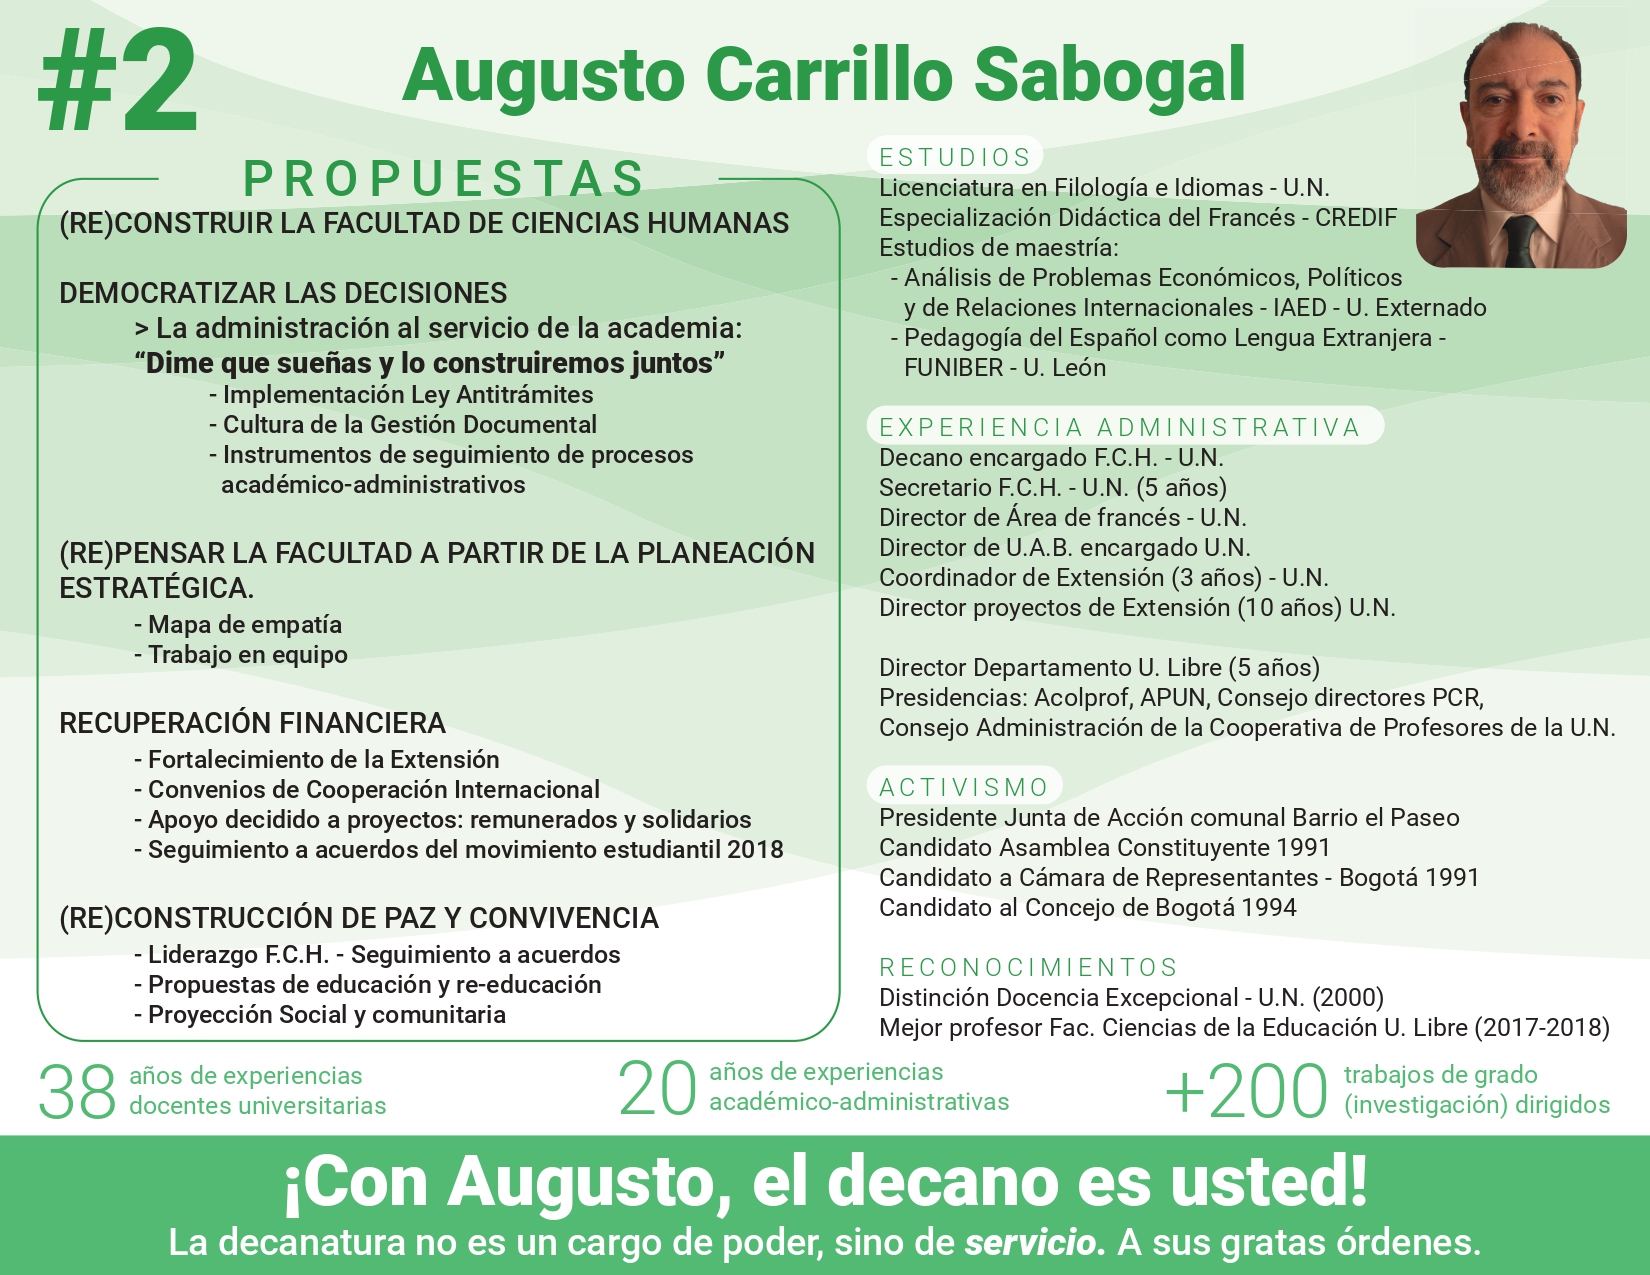 #2 Augusto Carrillo Sabogal